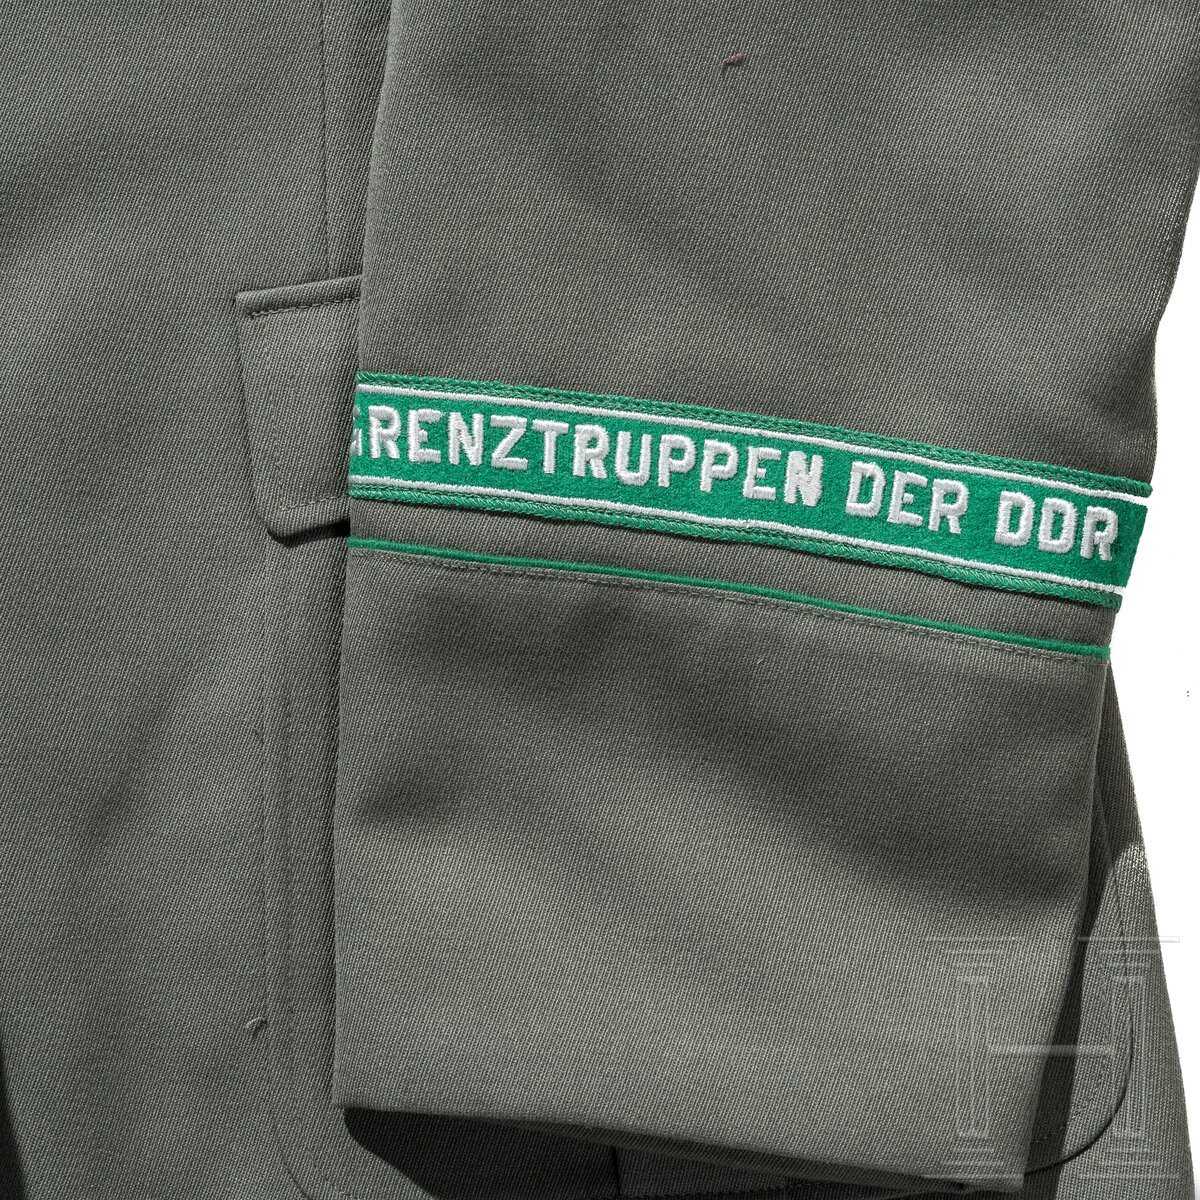 Sammlung DDR-Uniformen - Image 4 of 11